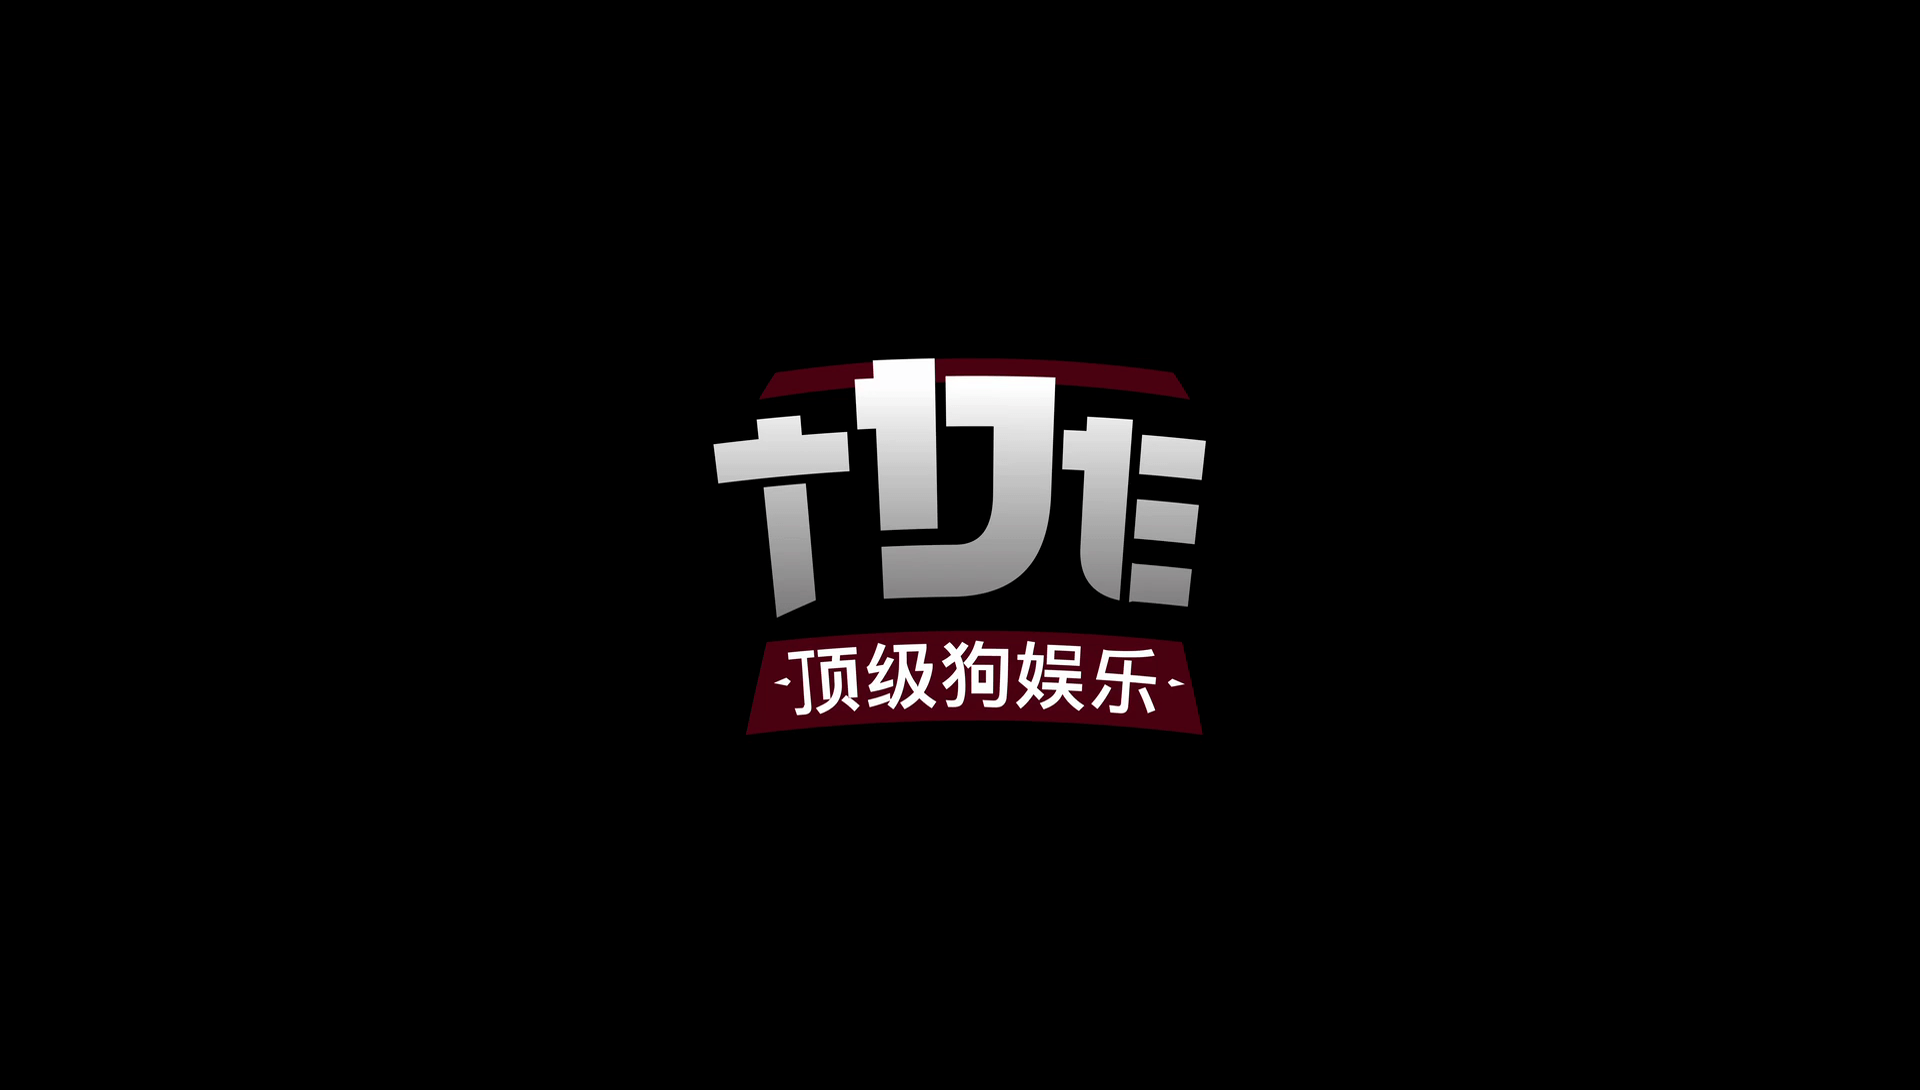 TDE Logo - New TDE Logo : HipHopImages